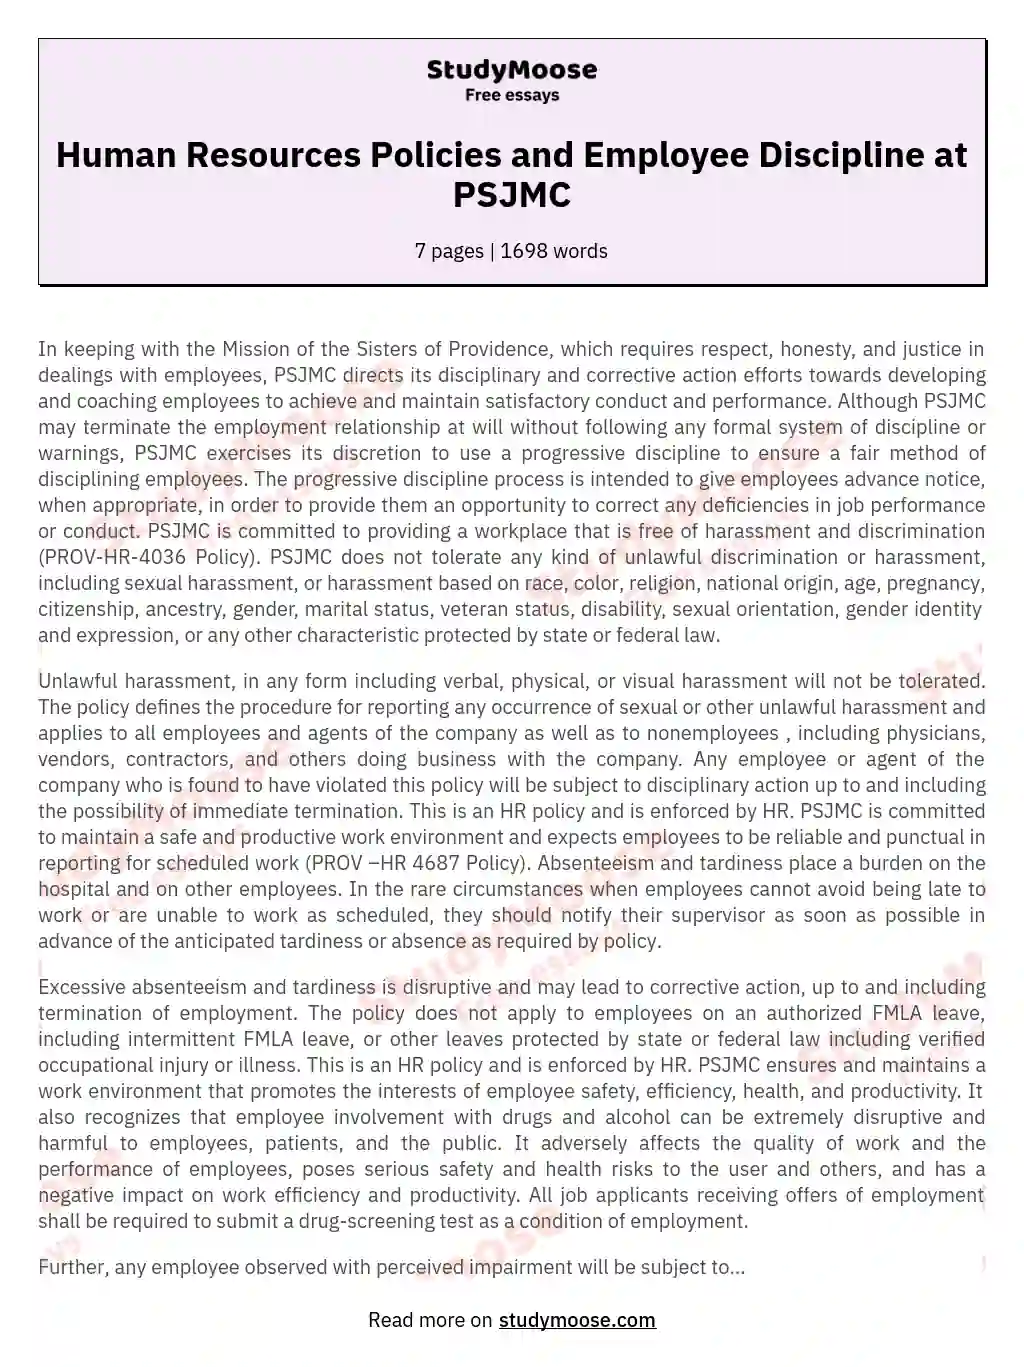 Human Resources Policies and Employee Discipline at PSJMC essay